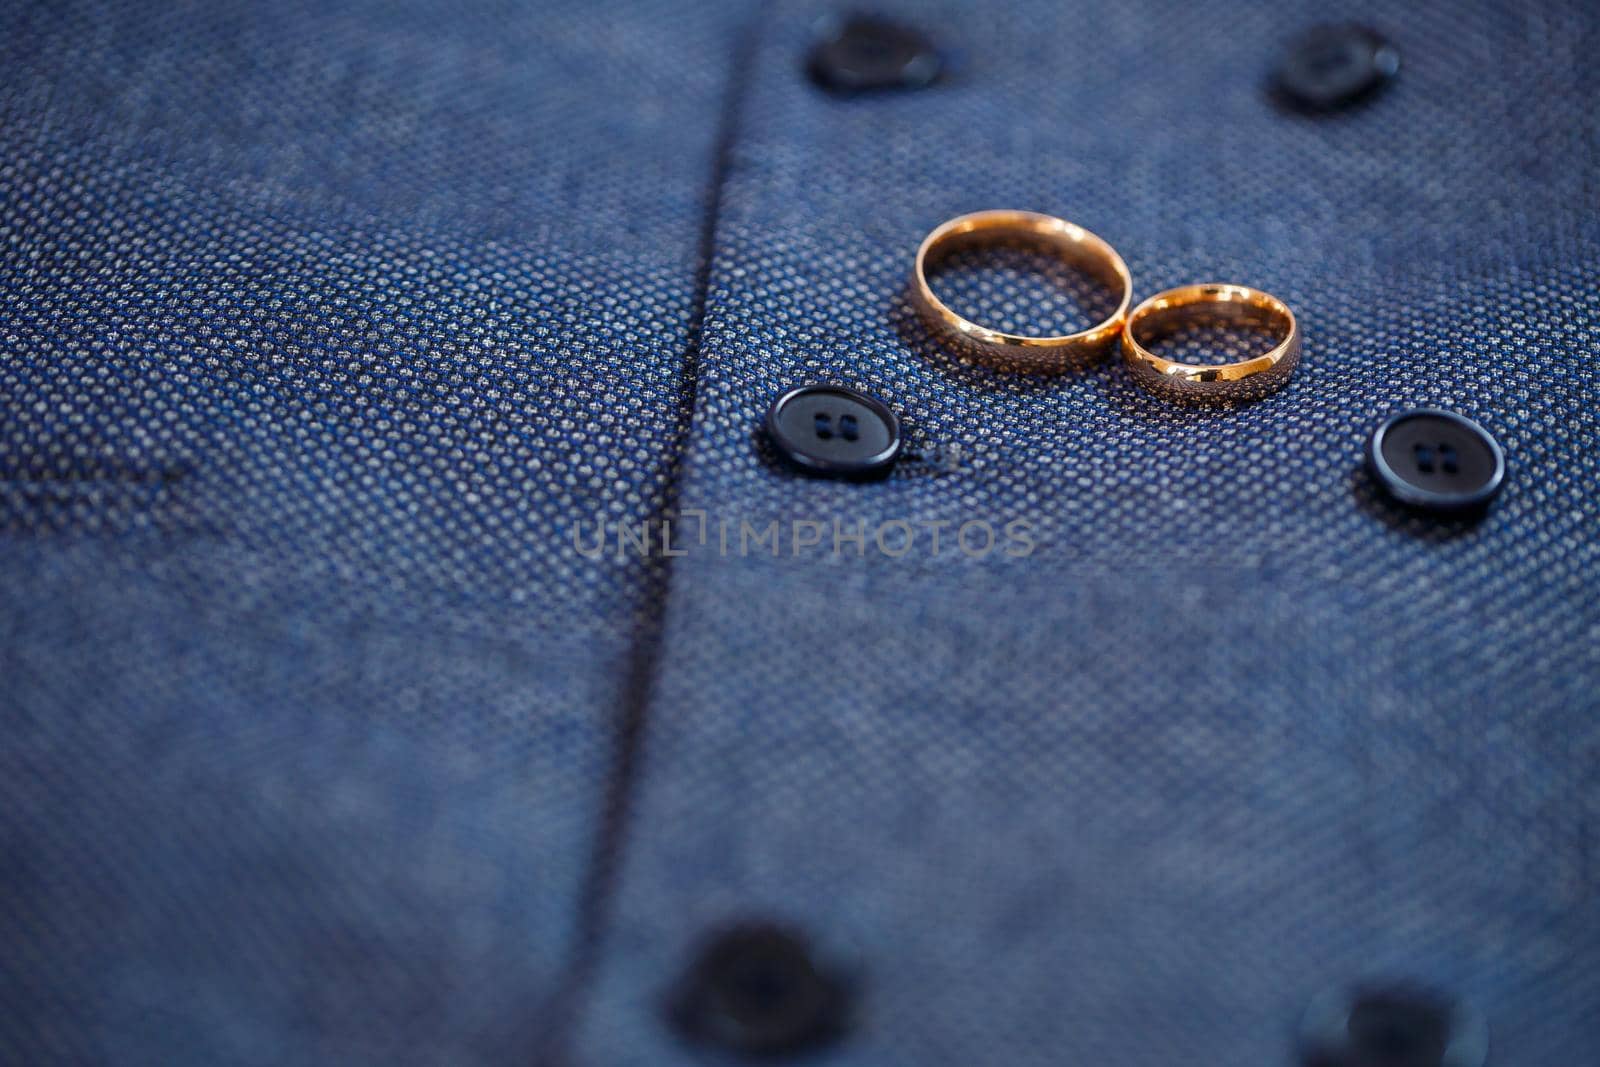 Golden wedding rings for newlyweds on their wedding day by Dmitrytph